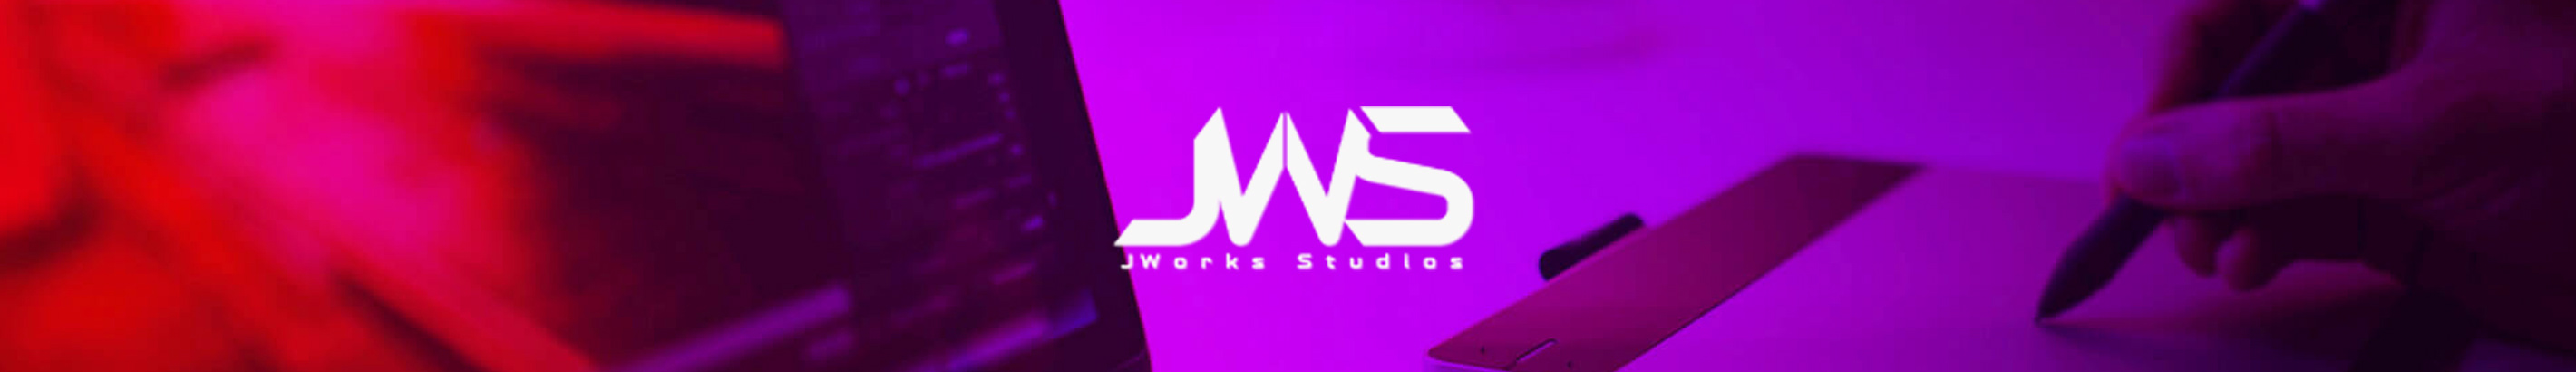 JWorks Studios 님의 프로필 배너